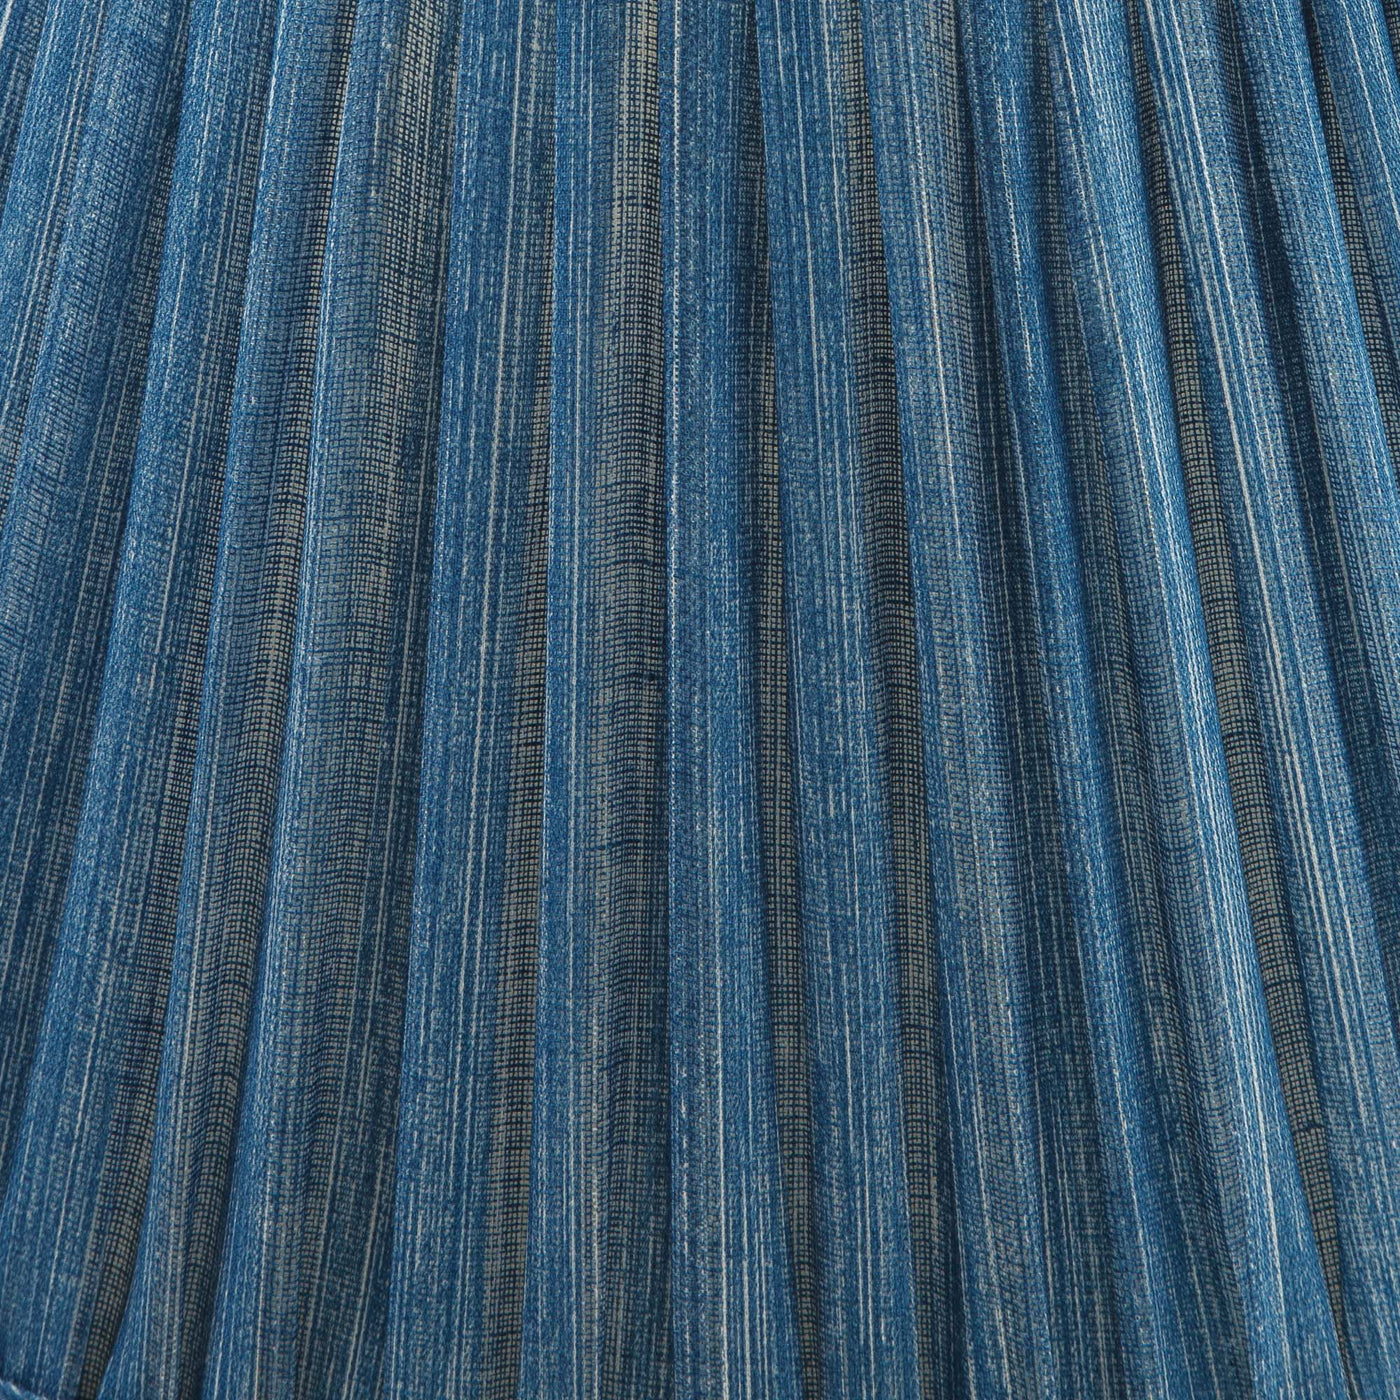 4.5" Fermoie Lampshade - Plain Linen in Sacre Bleu  | Newport Lamp And Shade | Located in Newport, RI